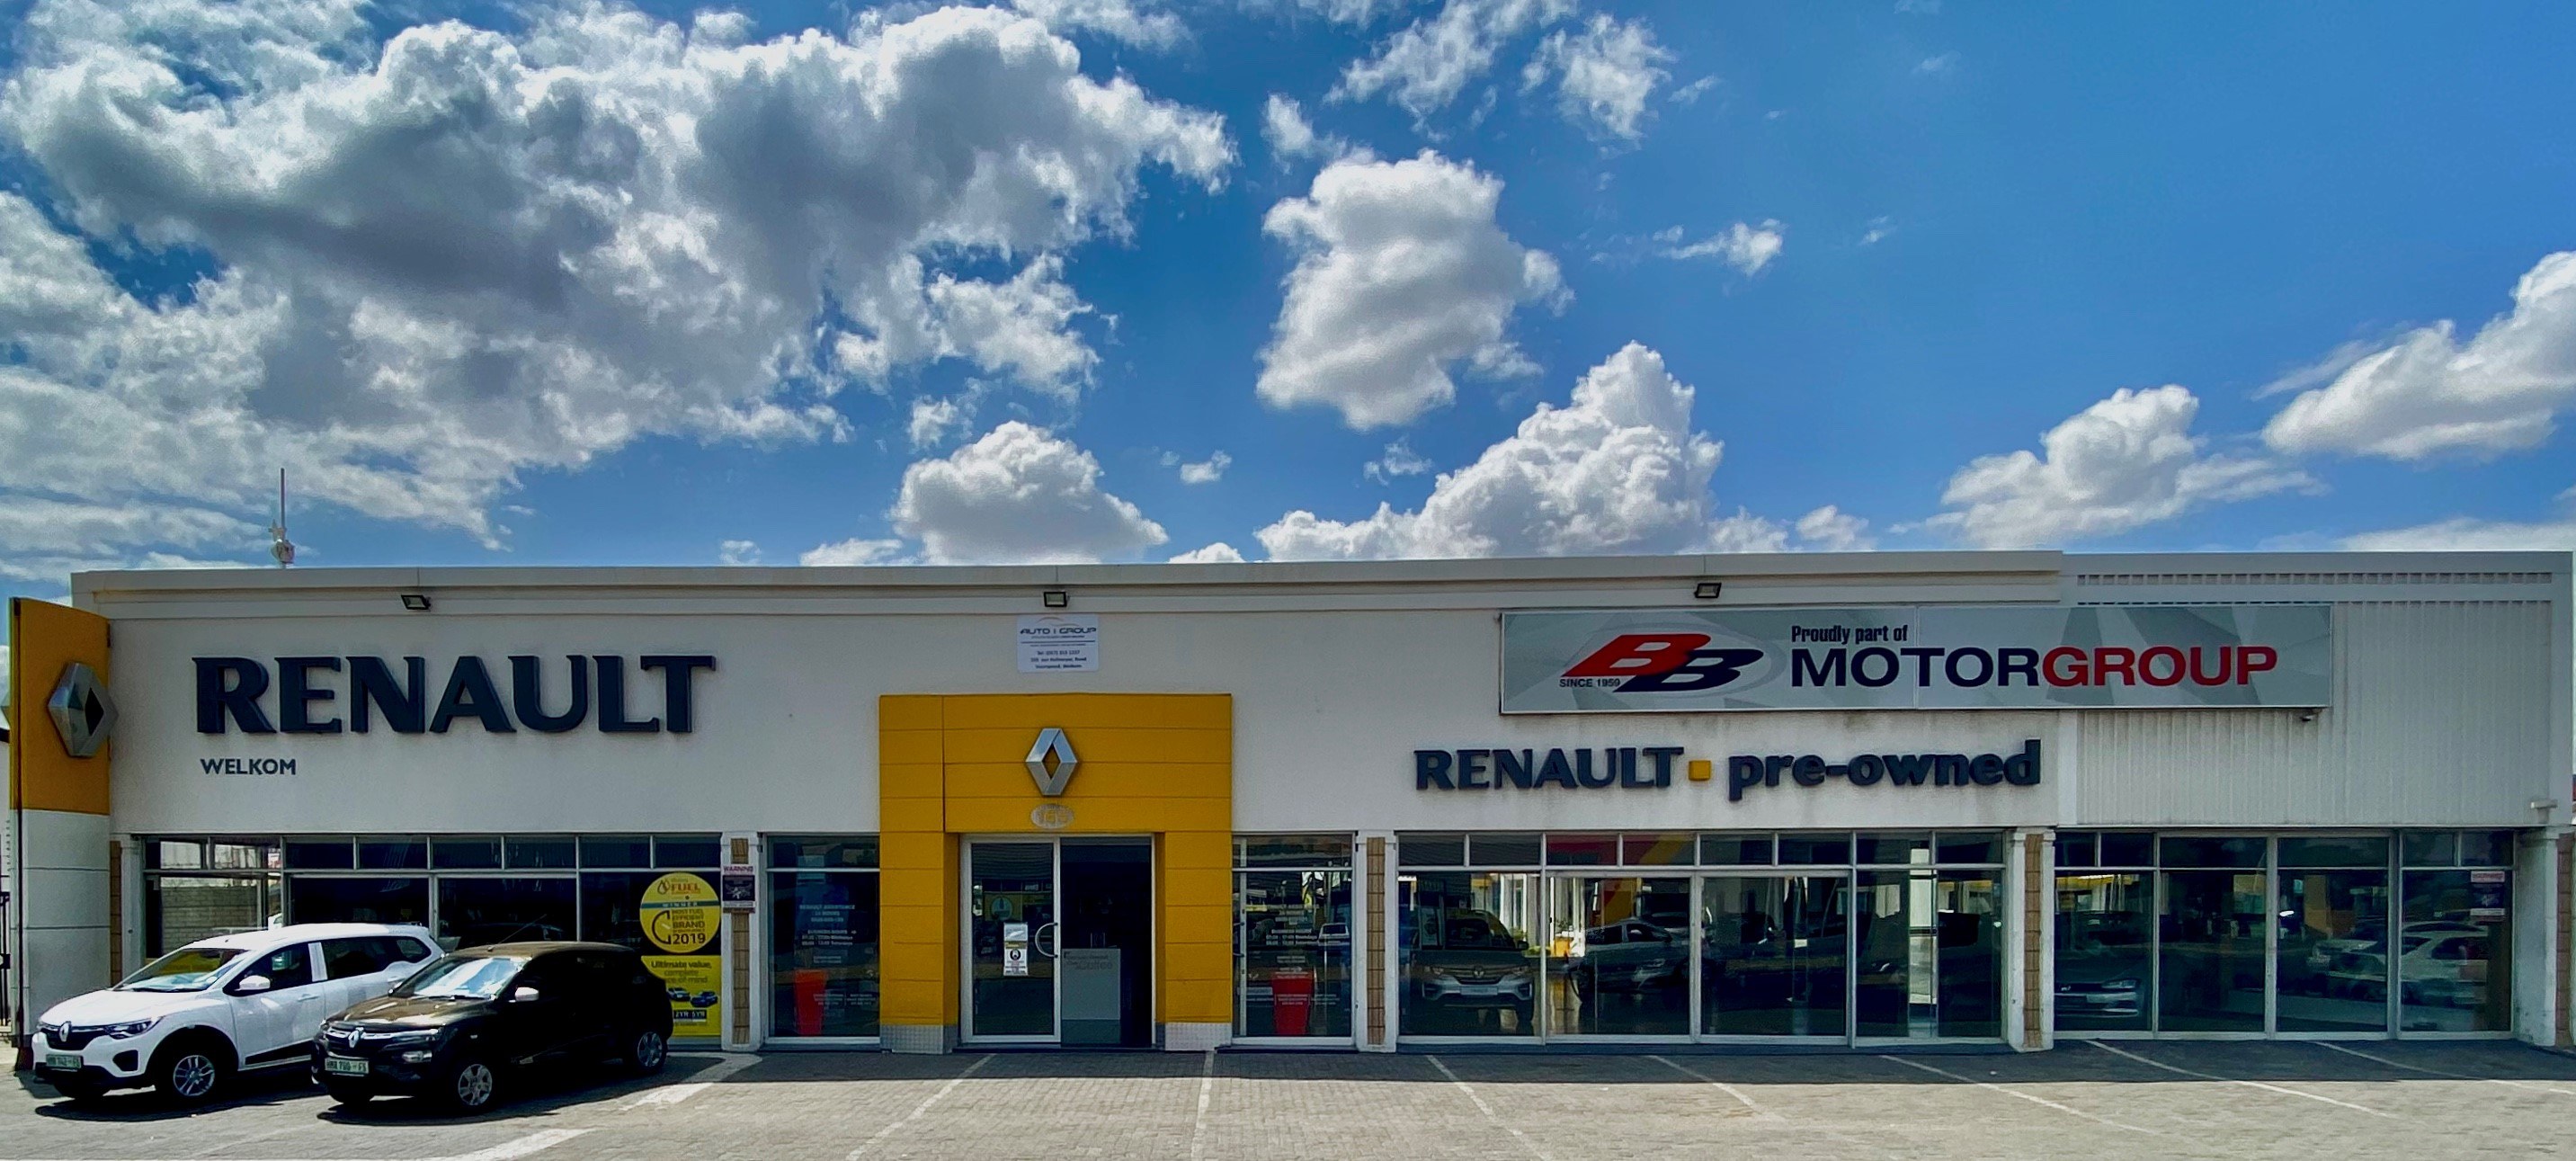 BB Welkom’s Renault Dealership.